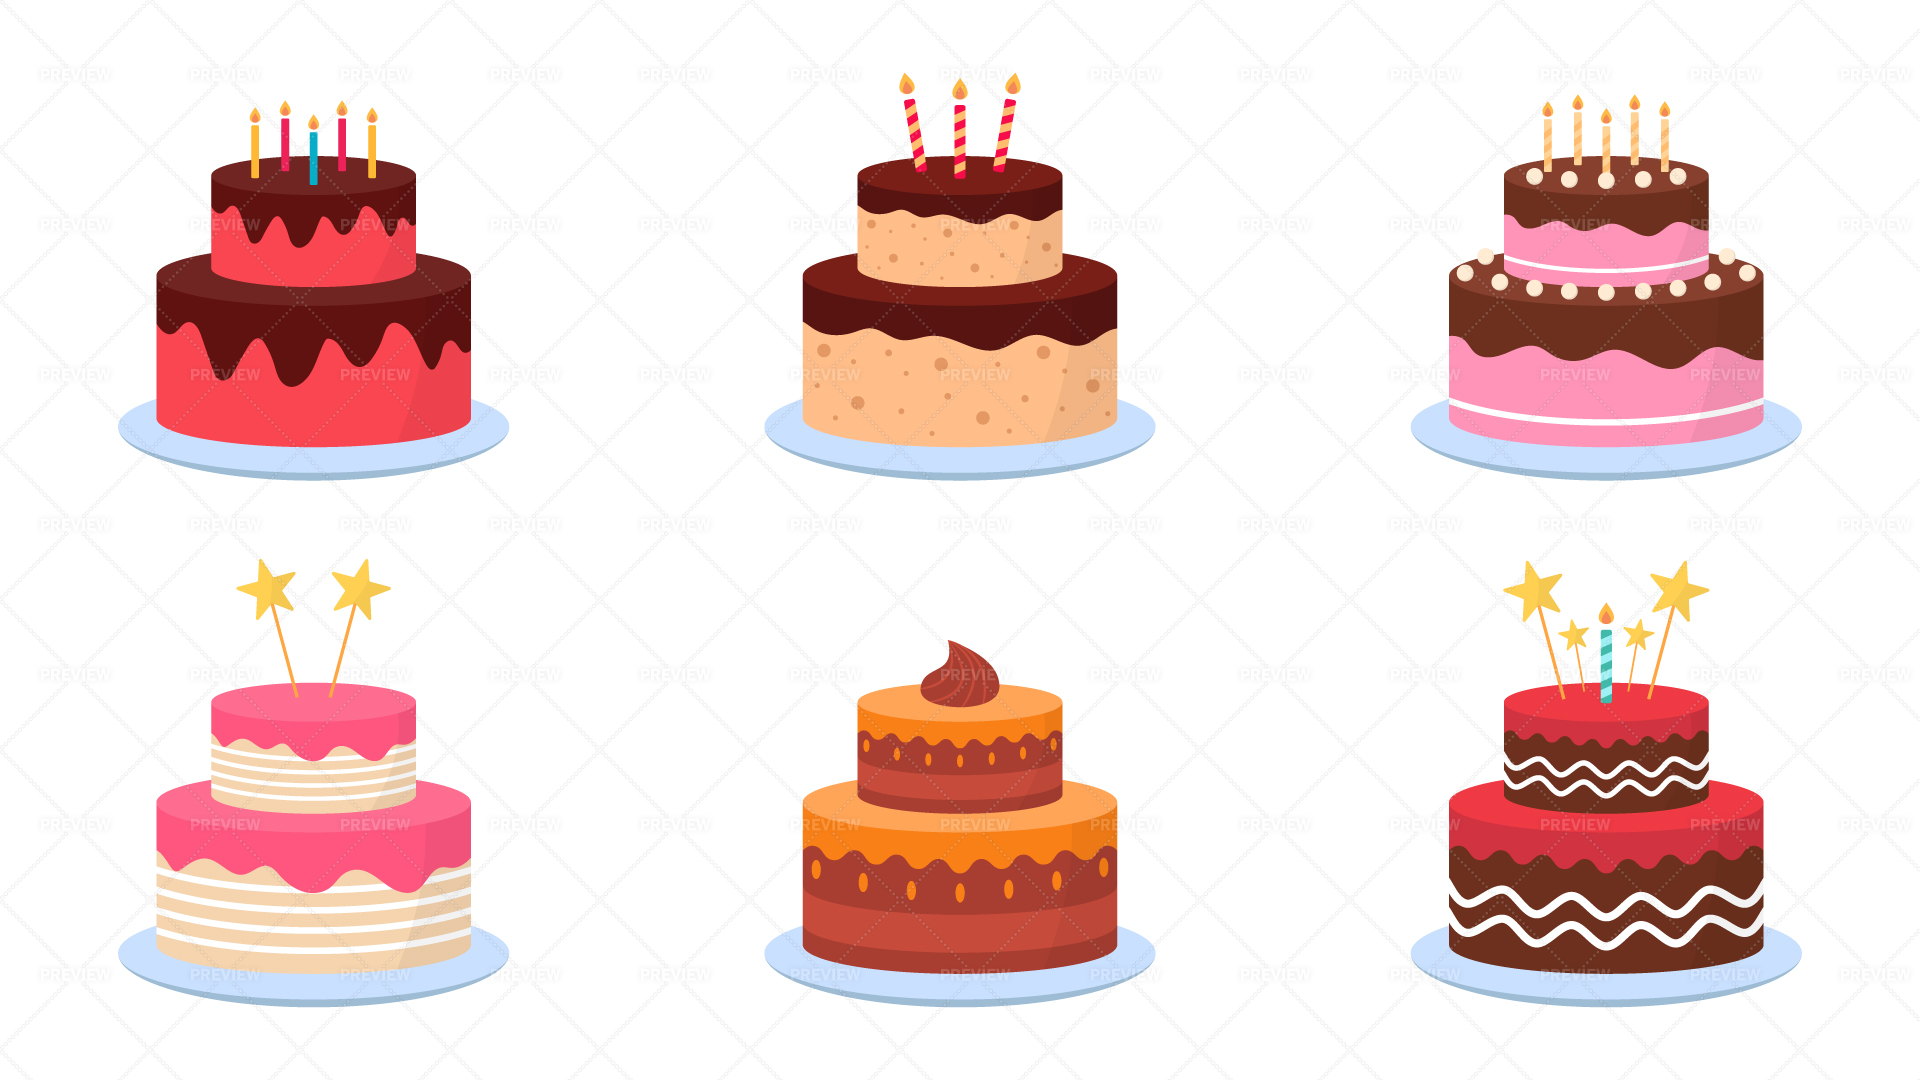 Happy Birthday Cake Graphic Design Vector: Vector có sẵn (miễn phí bản  quyền) 354676628 | Shutterstock